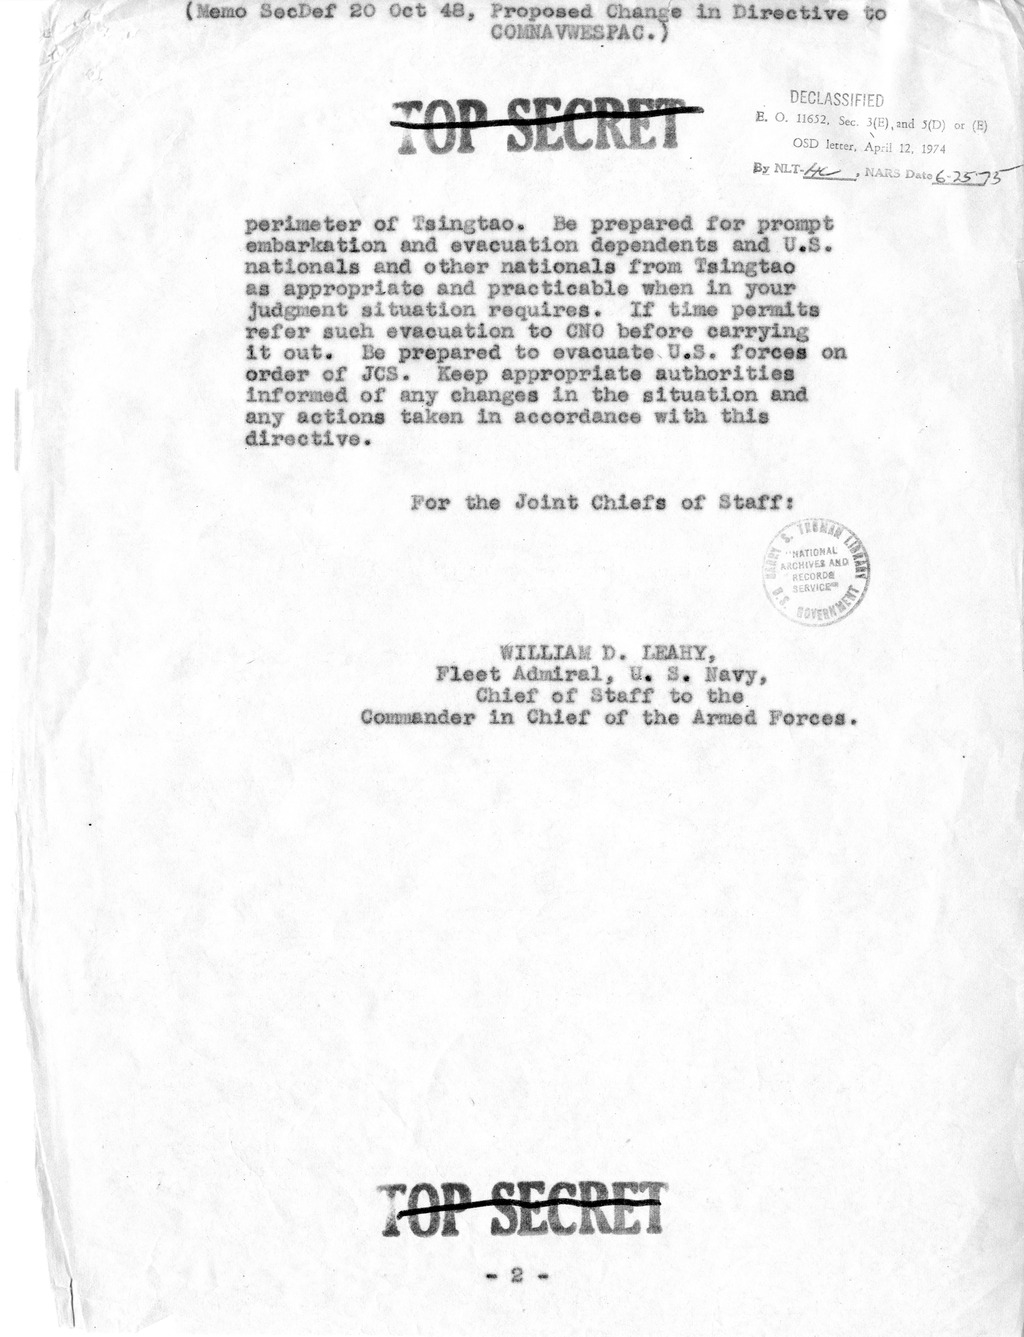 Memorandum from Admiral William Leahy to Secretary of Defense James Forrestal